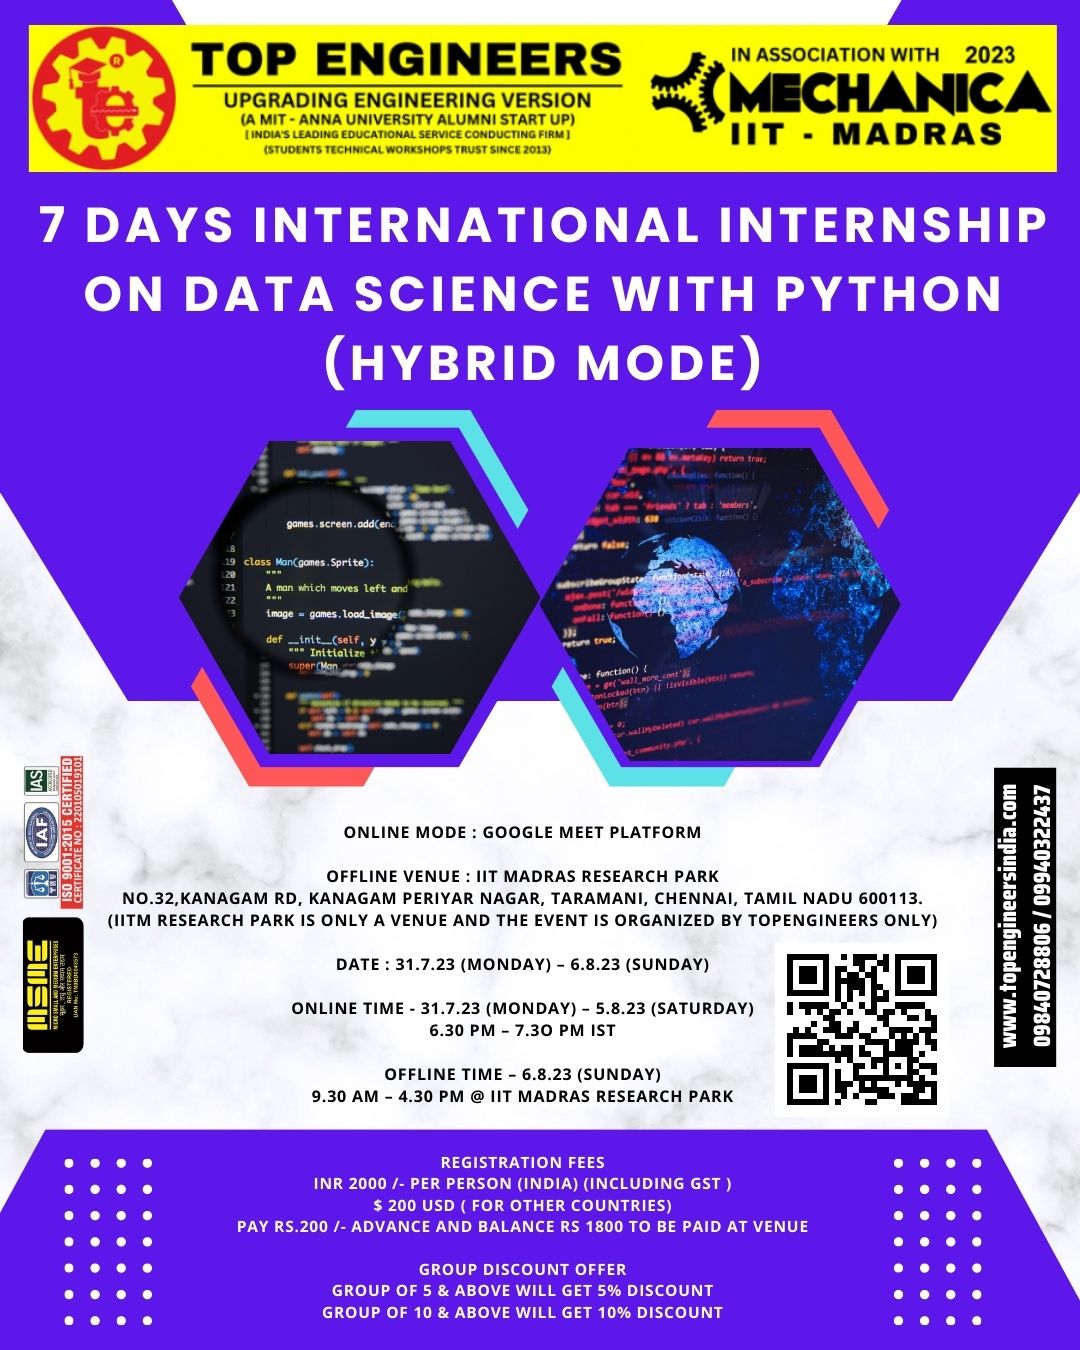 7 Days International Internship on Data Science with Python (hybrid Mode) 2023